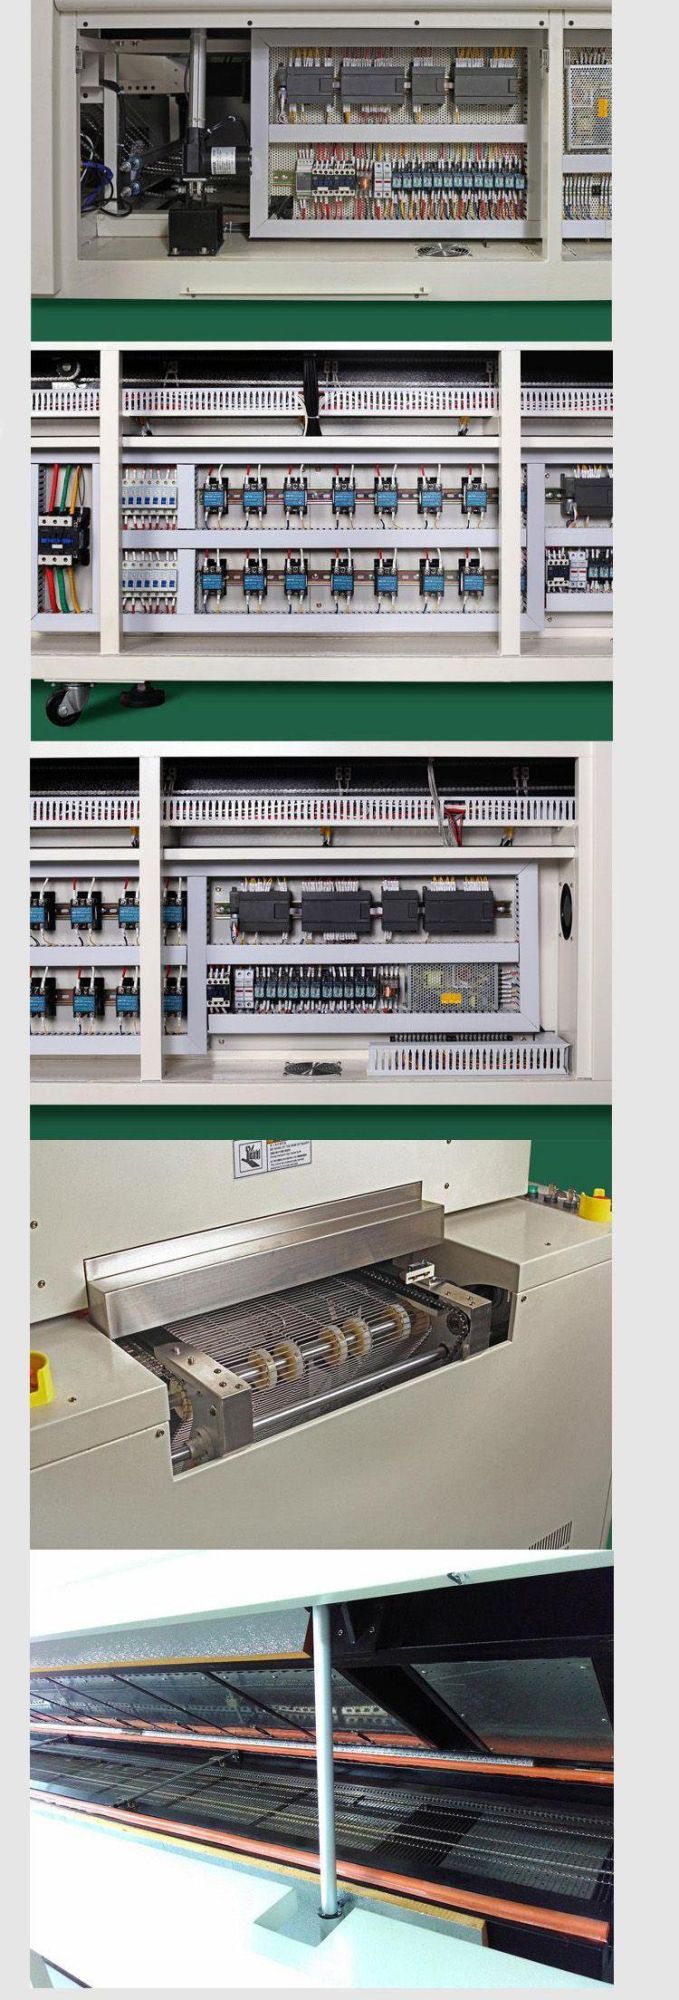 12+2 Zones Reflow Oven SMT Jaguar High Performance Automation Equipment F12